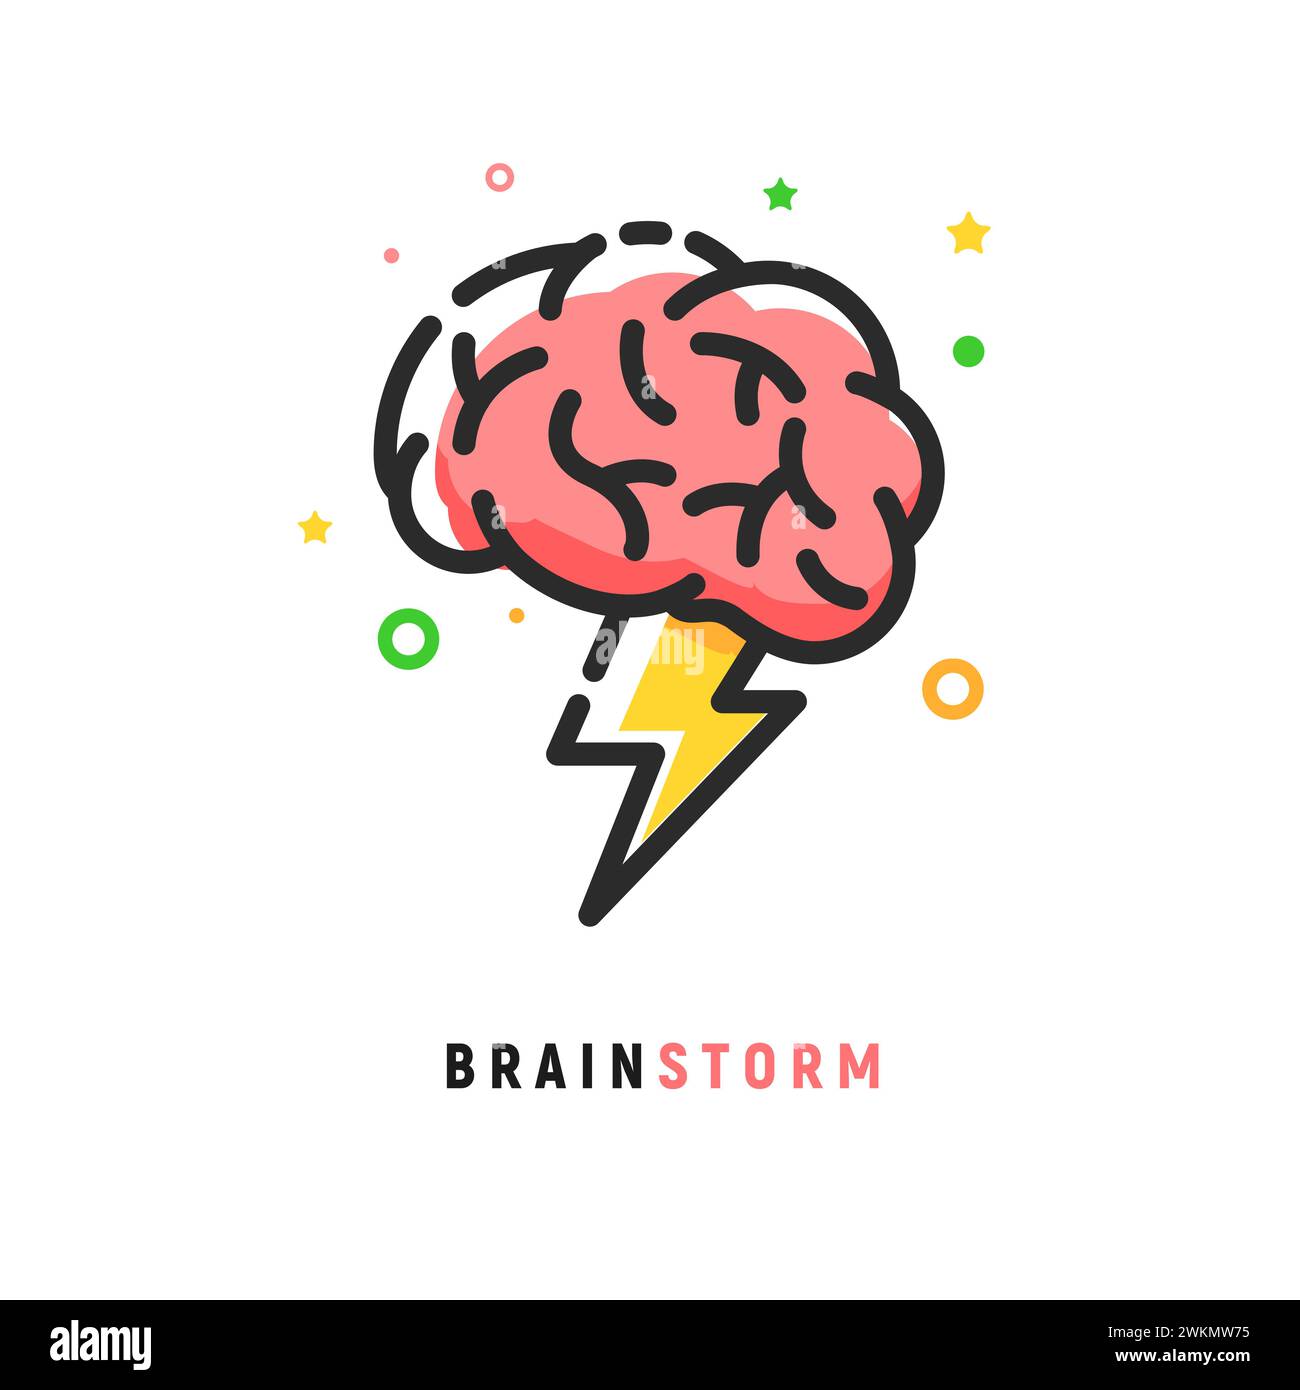 Brainstorm vector icon idea. Brain storm lighting power creative concept, mind illustration Stock Vector